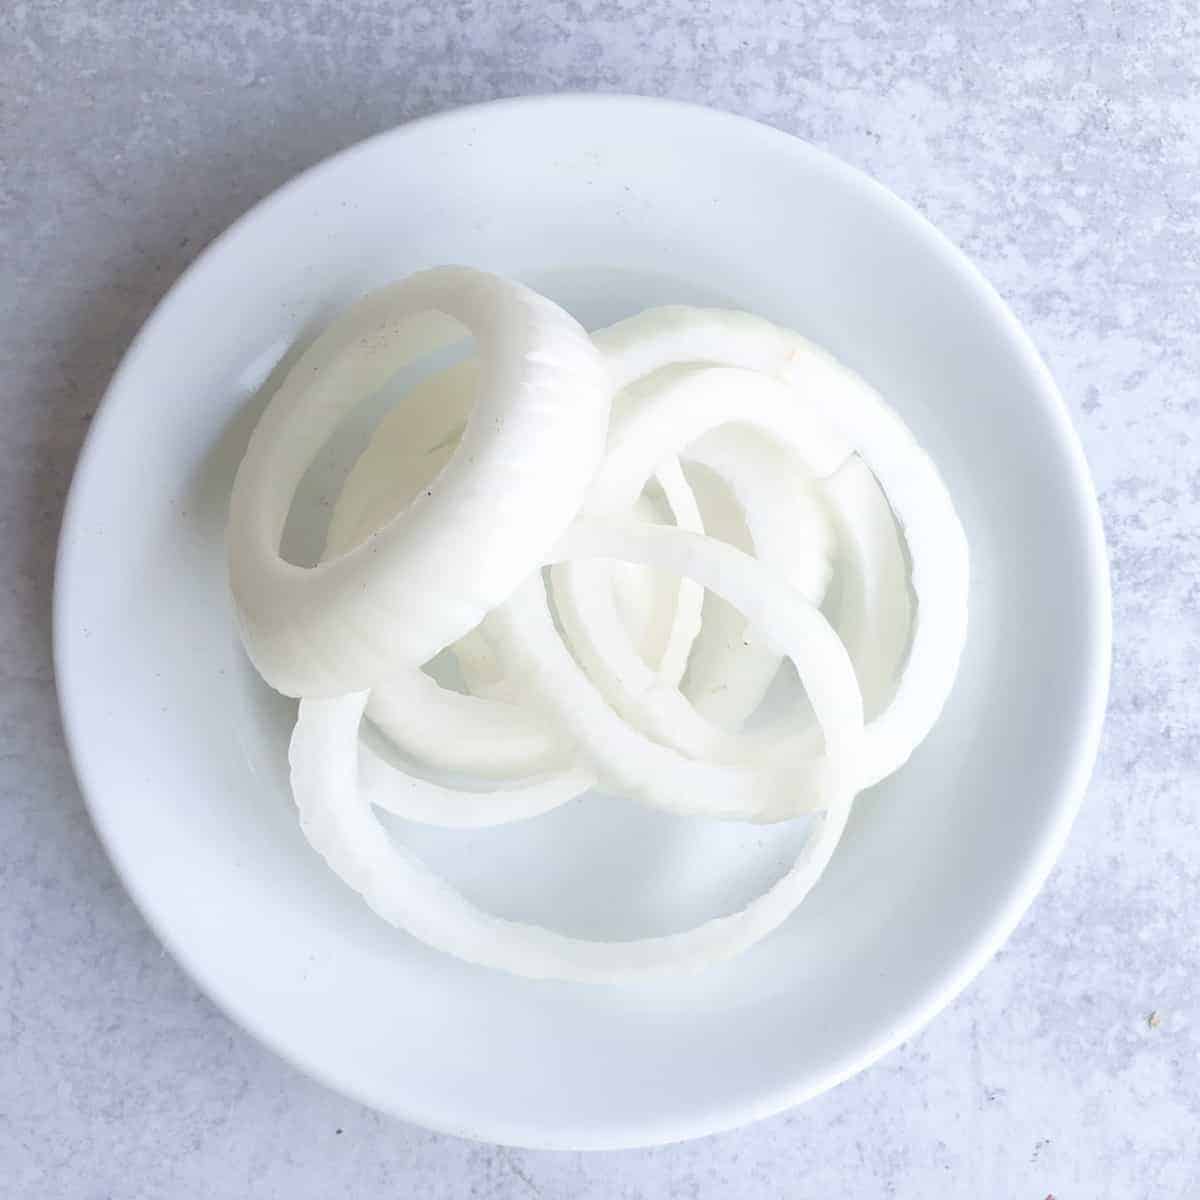 Sliced onions on plate.